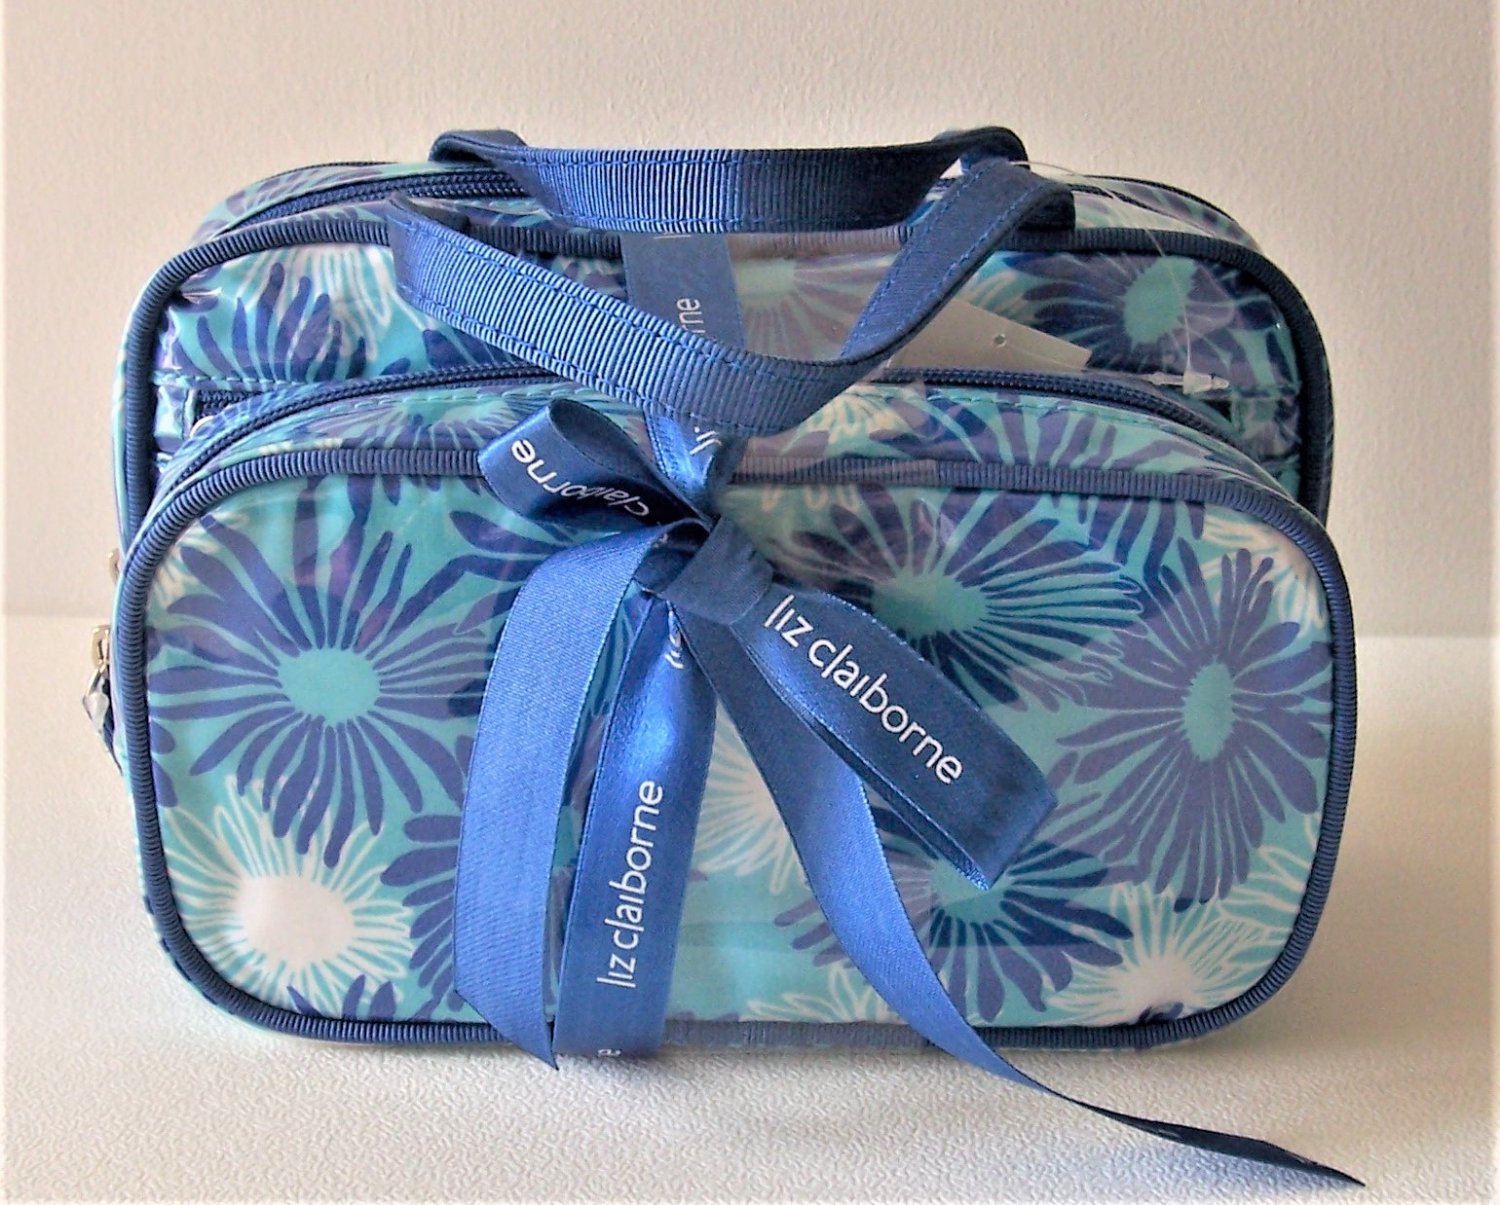 Liz Claiborne 2 Piece Cosmetic Case / Make up Travel Bag